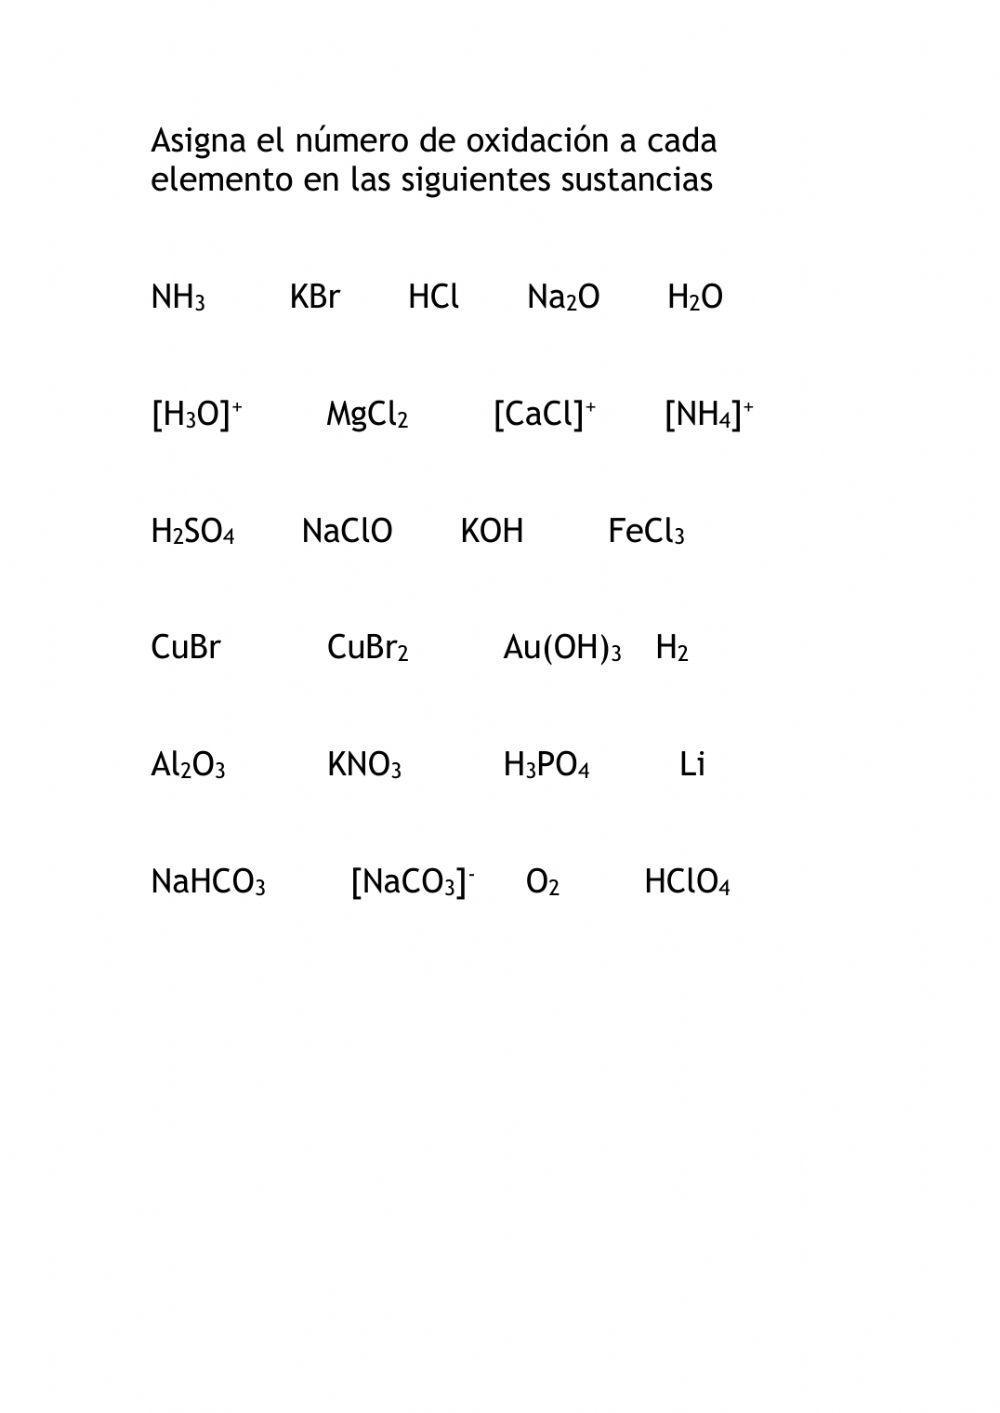 Asignación de números de oxidación